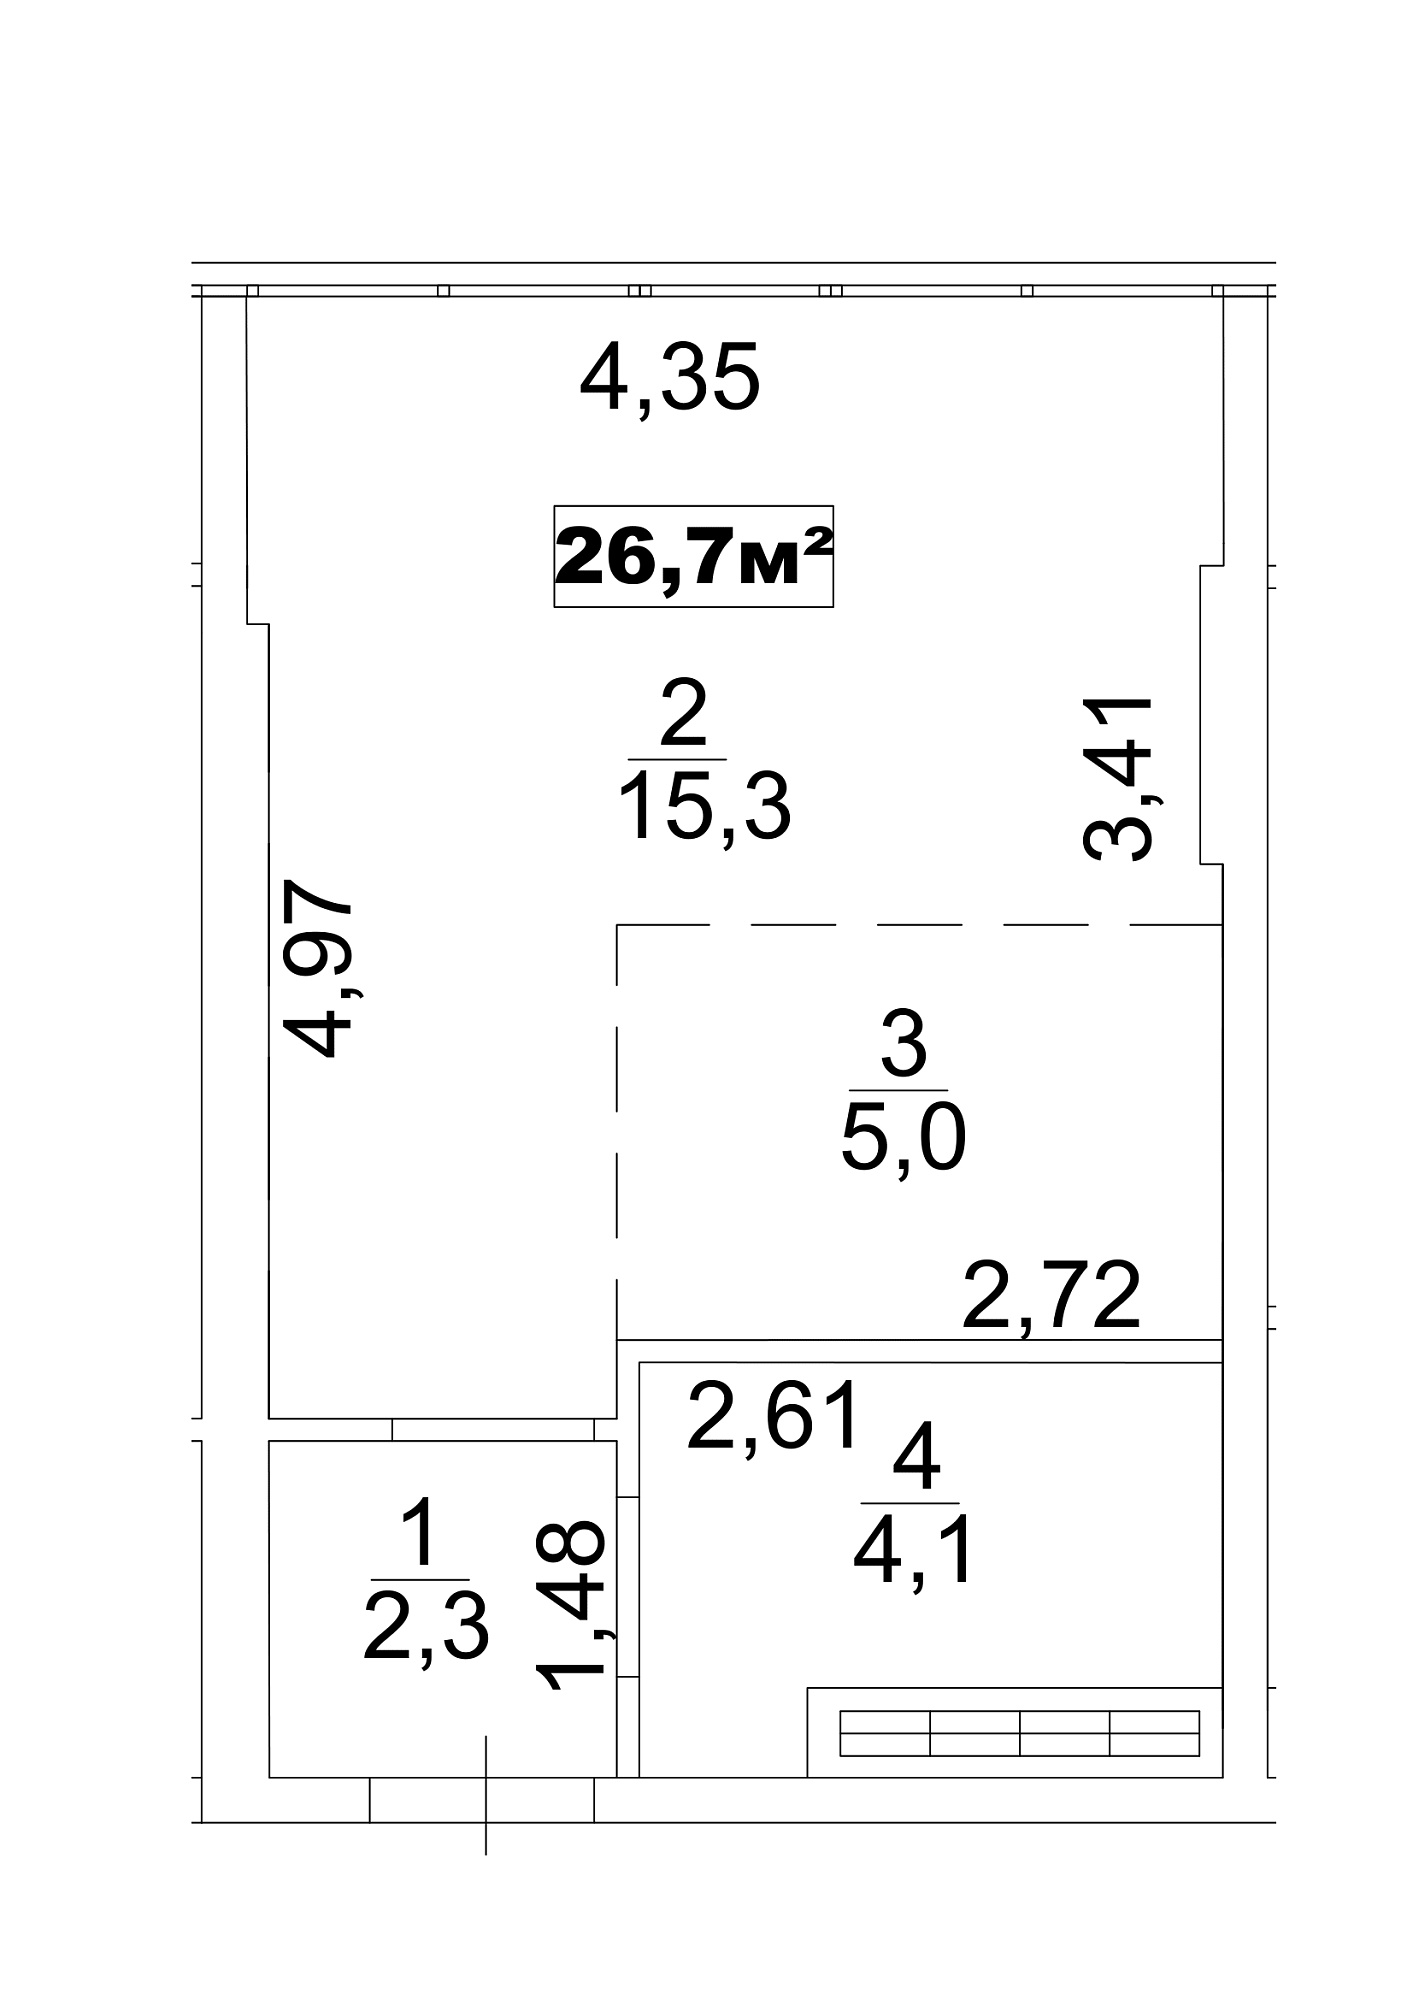 Планировка Smart-квартира площей 26.7м2, AB-13-08/0063в.